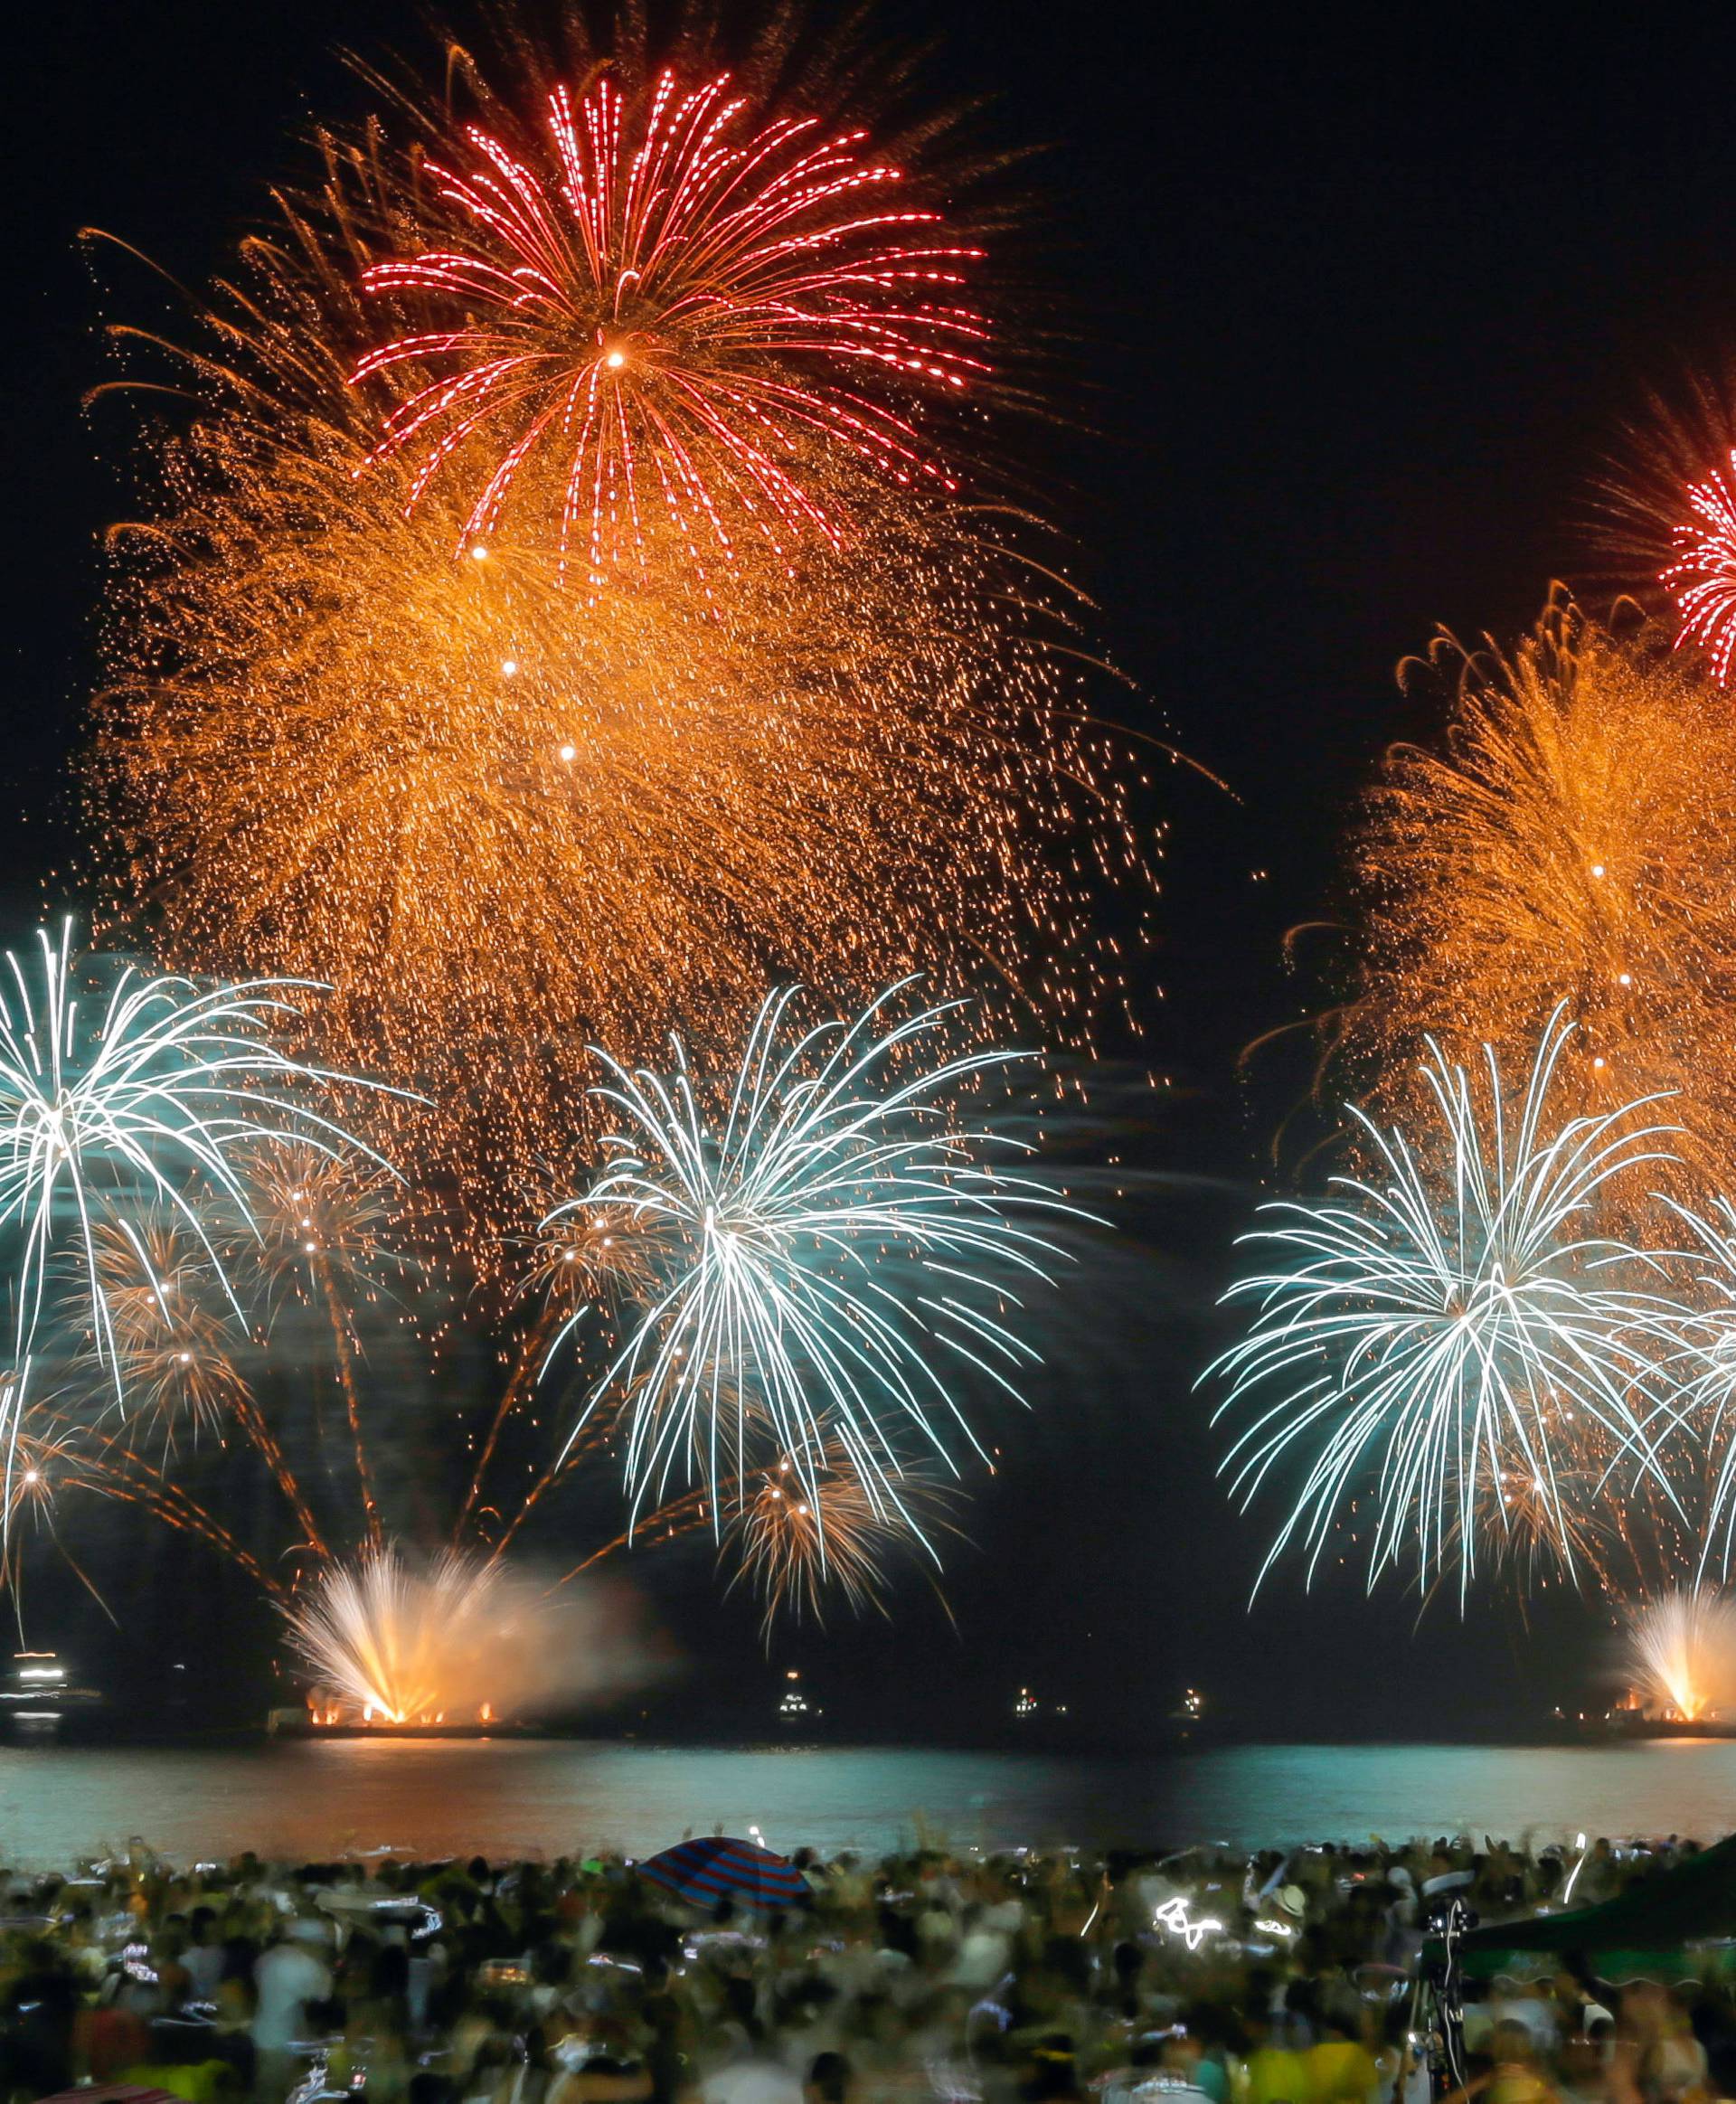 Fireworks explode over Copacabana beach during New Year celebrations in Rio de Janeiro